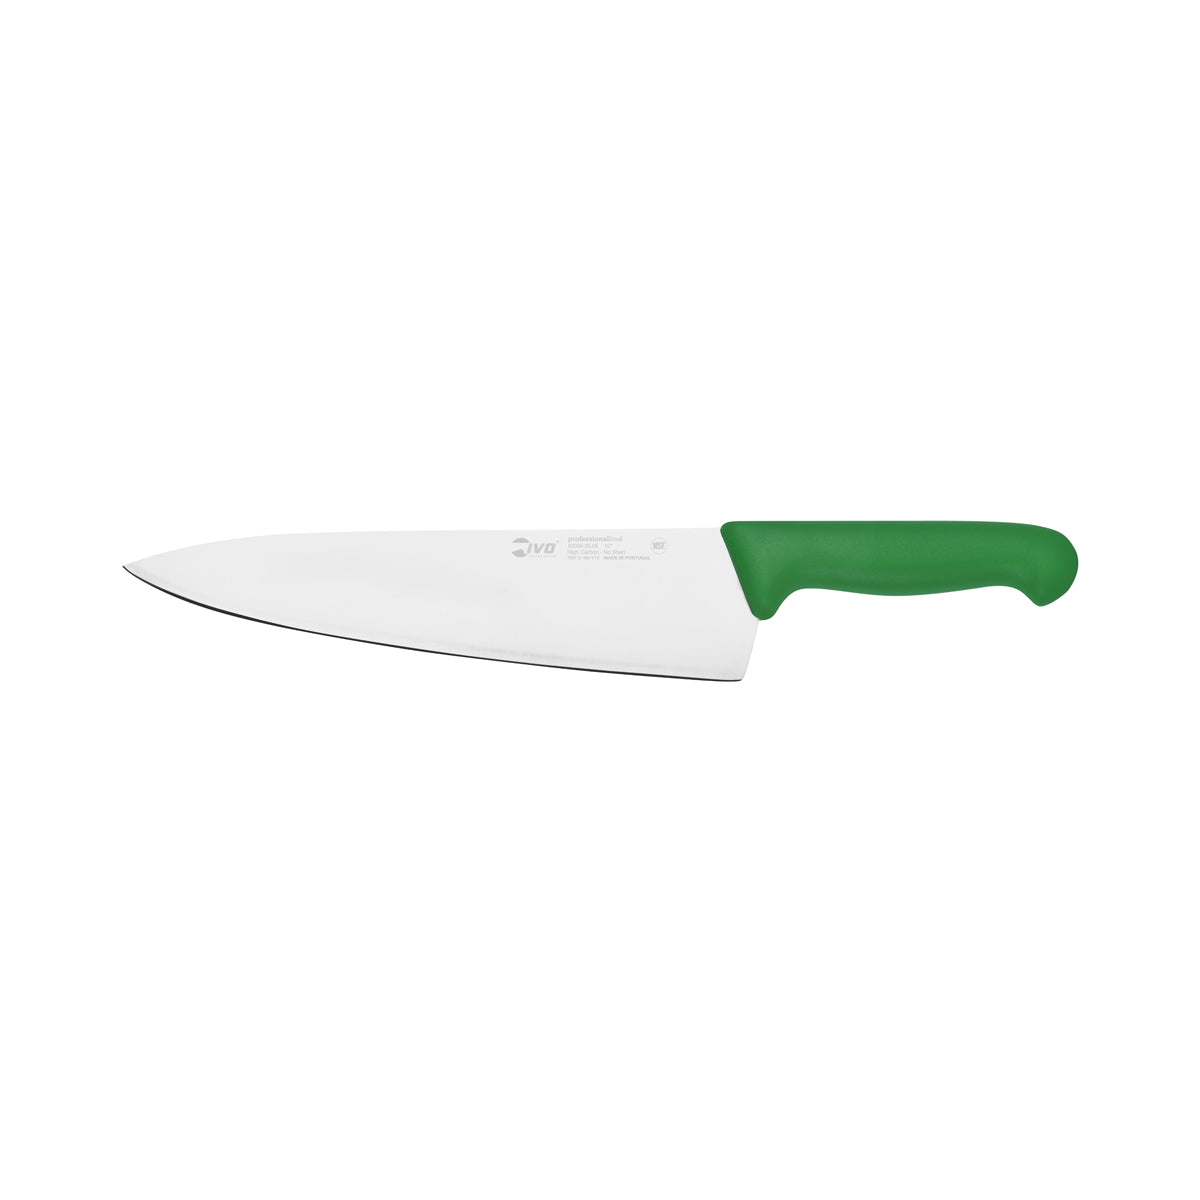 25449 Ivo Professional Line I Chefs Knife Green 250mm Tomkin Australia Hospitality Supplies